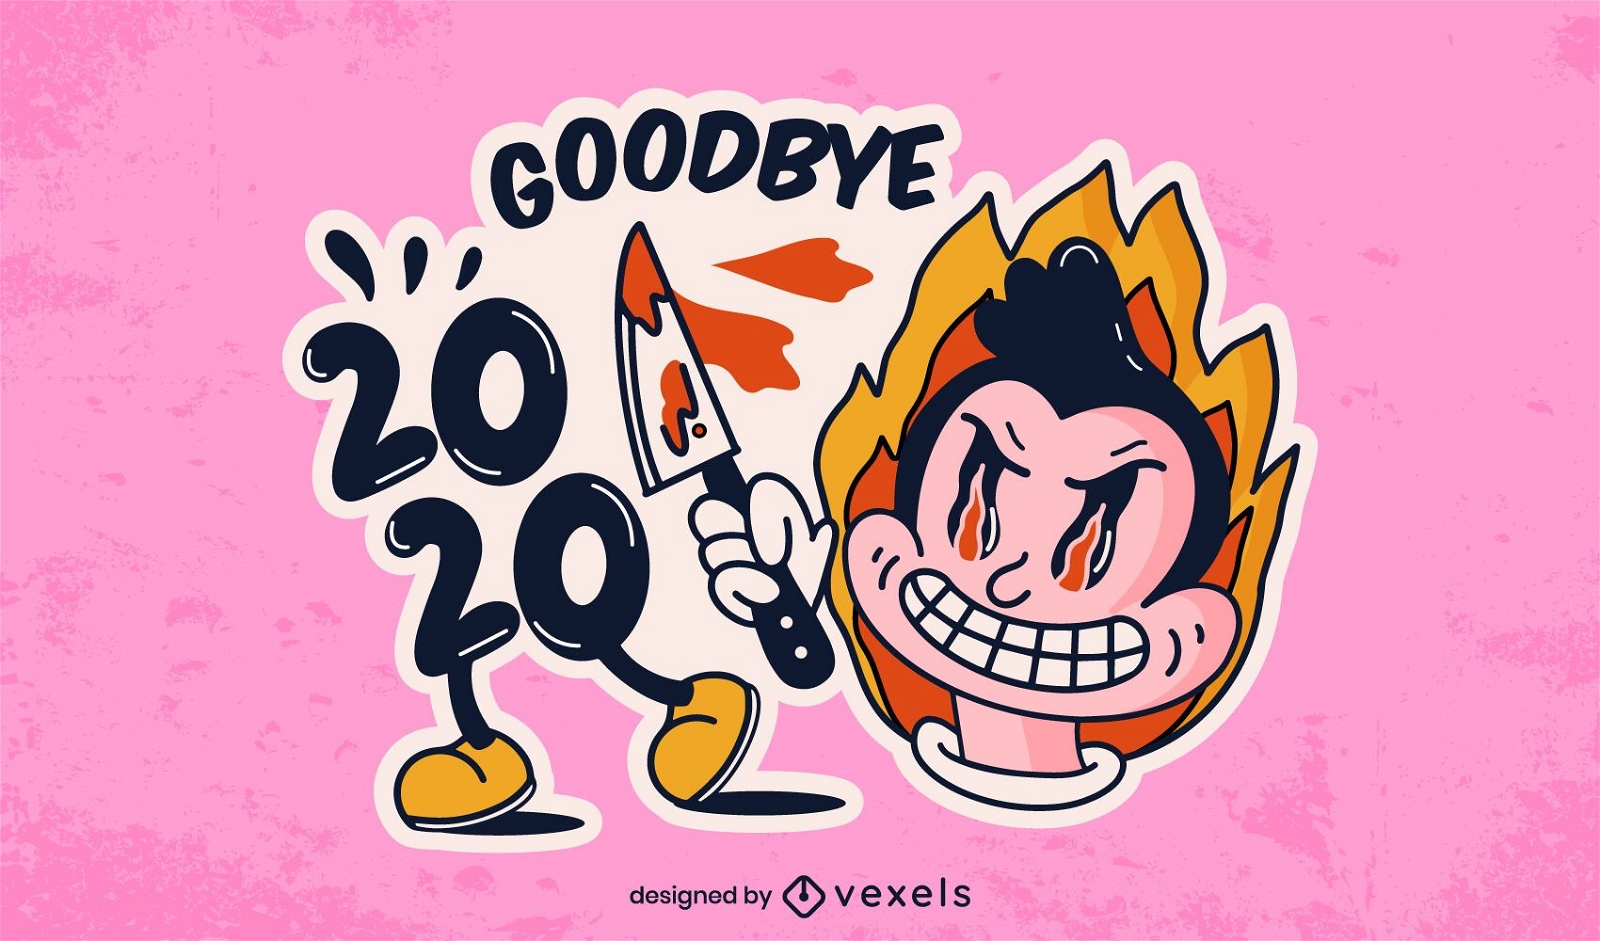 Goodbye 2020 sticker illustration design